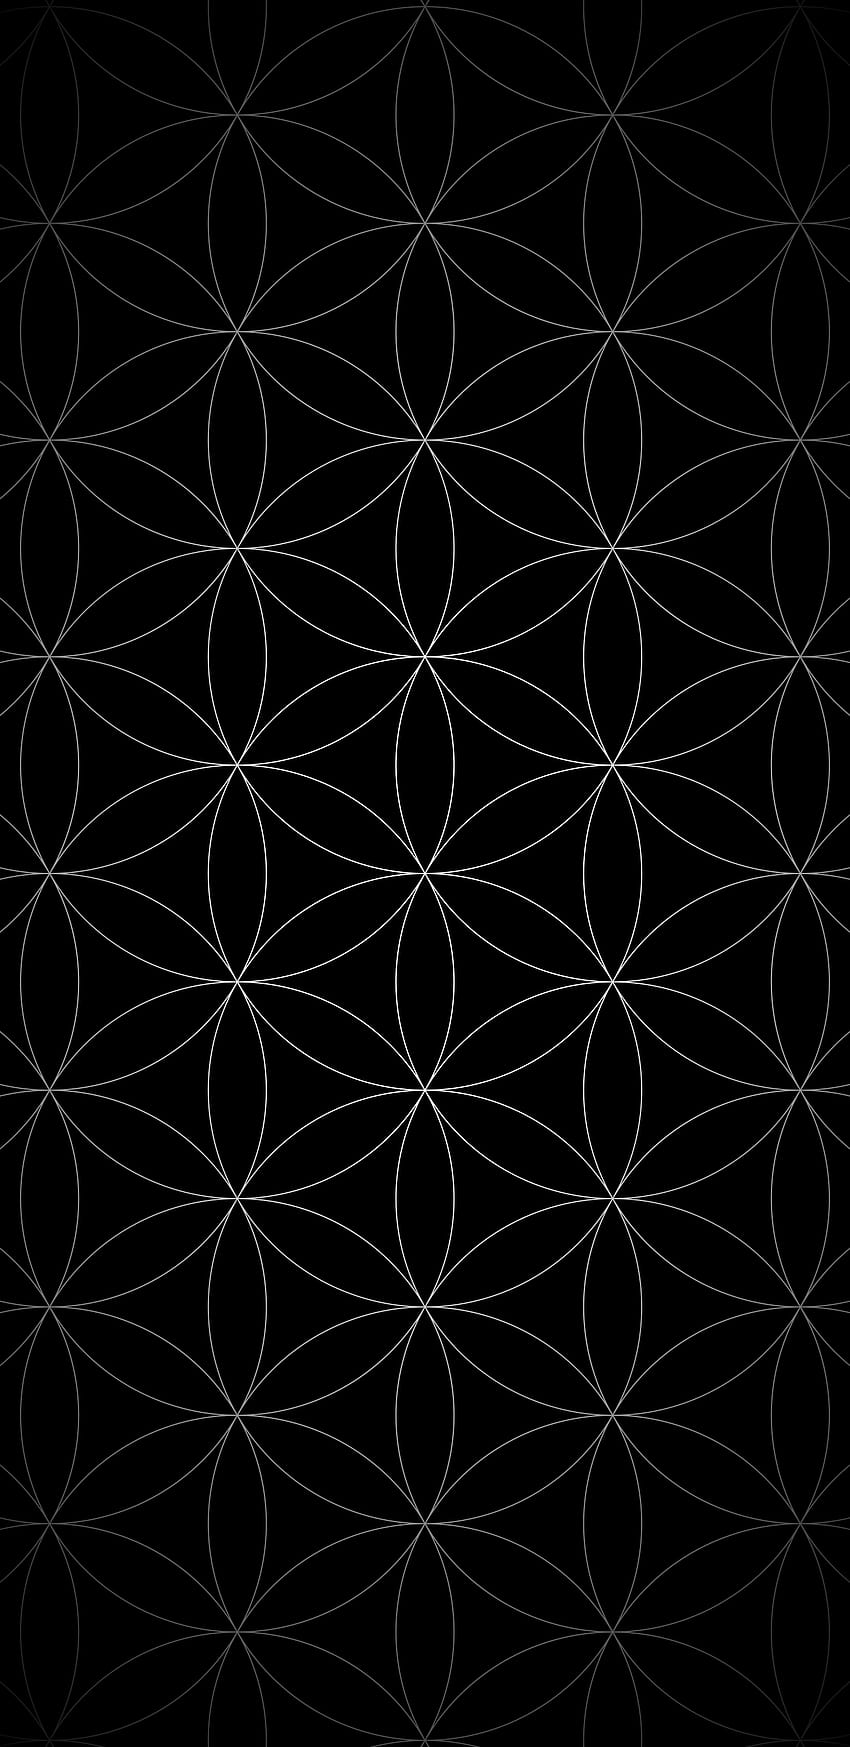 1440x2960] Flower of Life AMOLED / OLED Backgrounds, flower amoled HD phone wallpaper